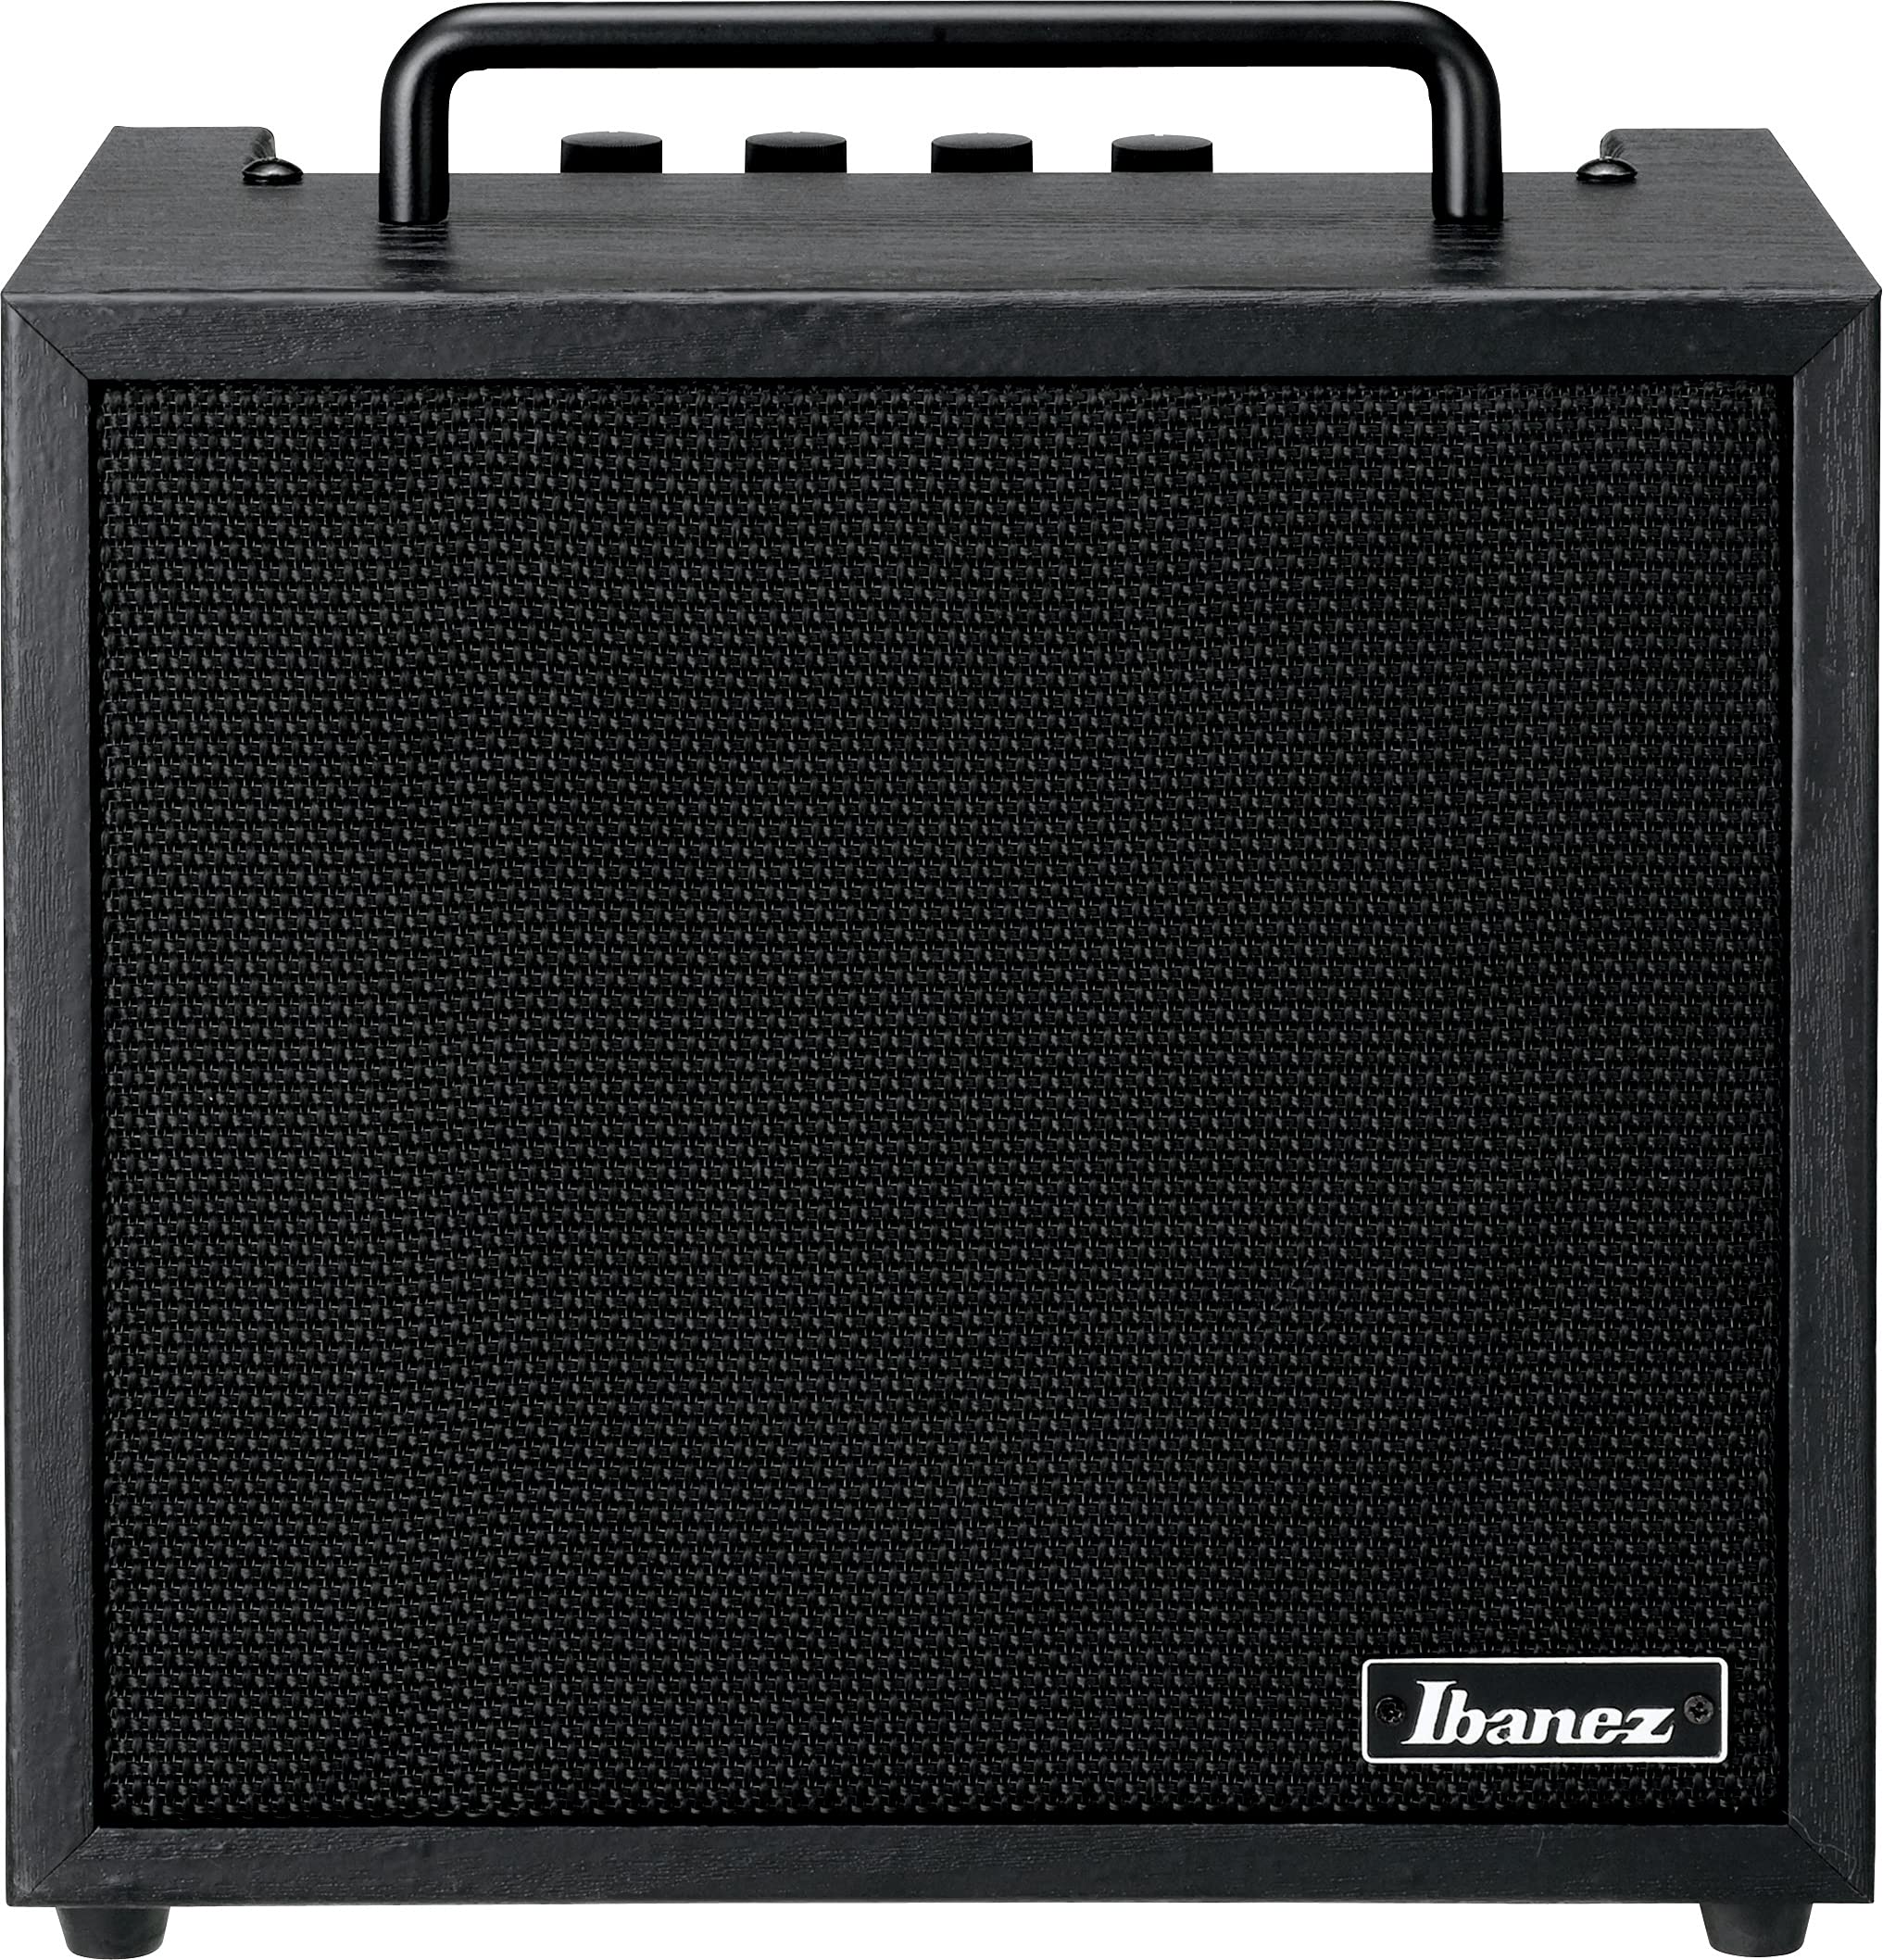 IBANEZ Bass Combo Amplifier - 10 Watt (IBZ10BV2)